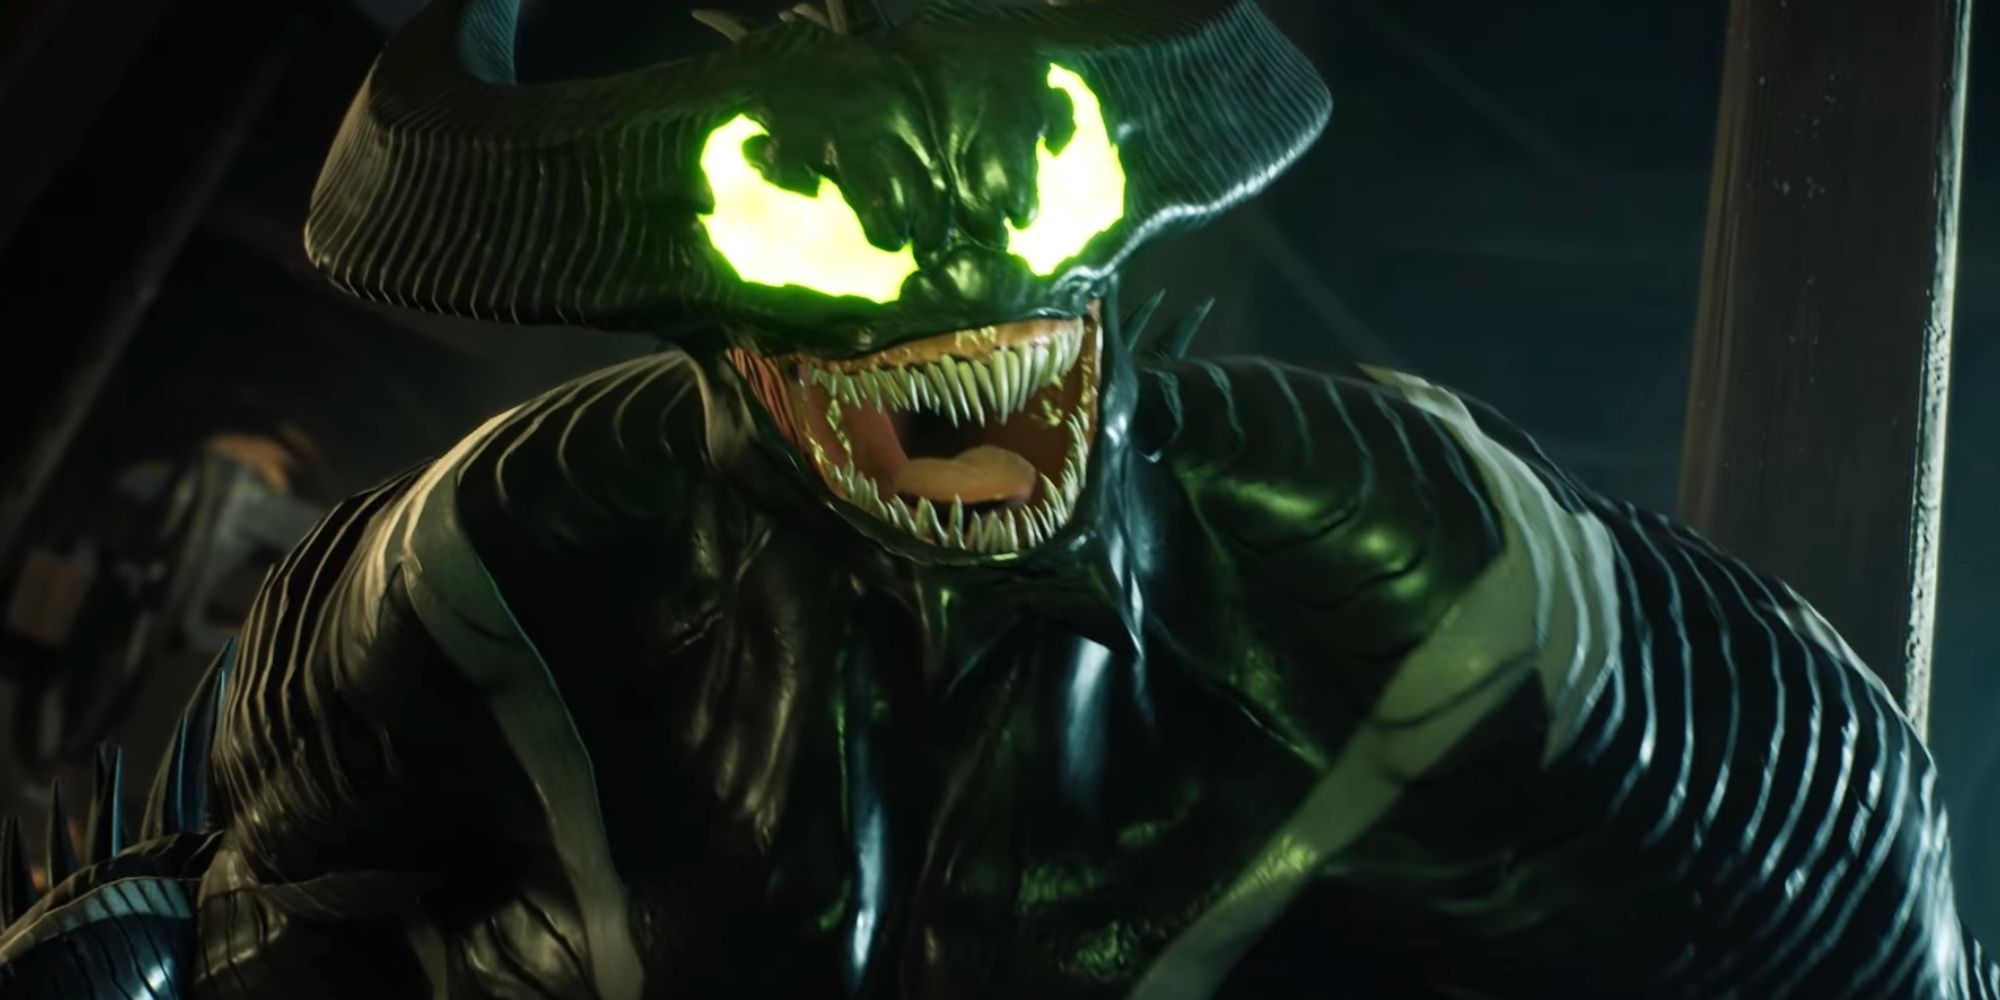 Fallen Venom cutscene of Venom interacting with Hunter and Spider-Man.